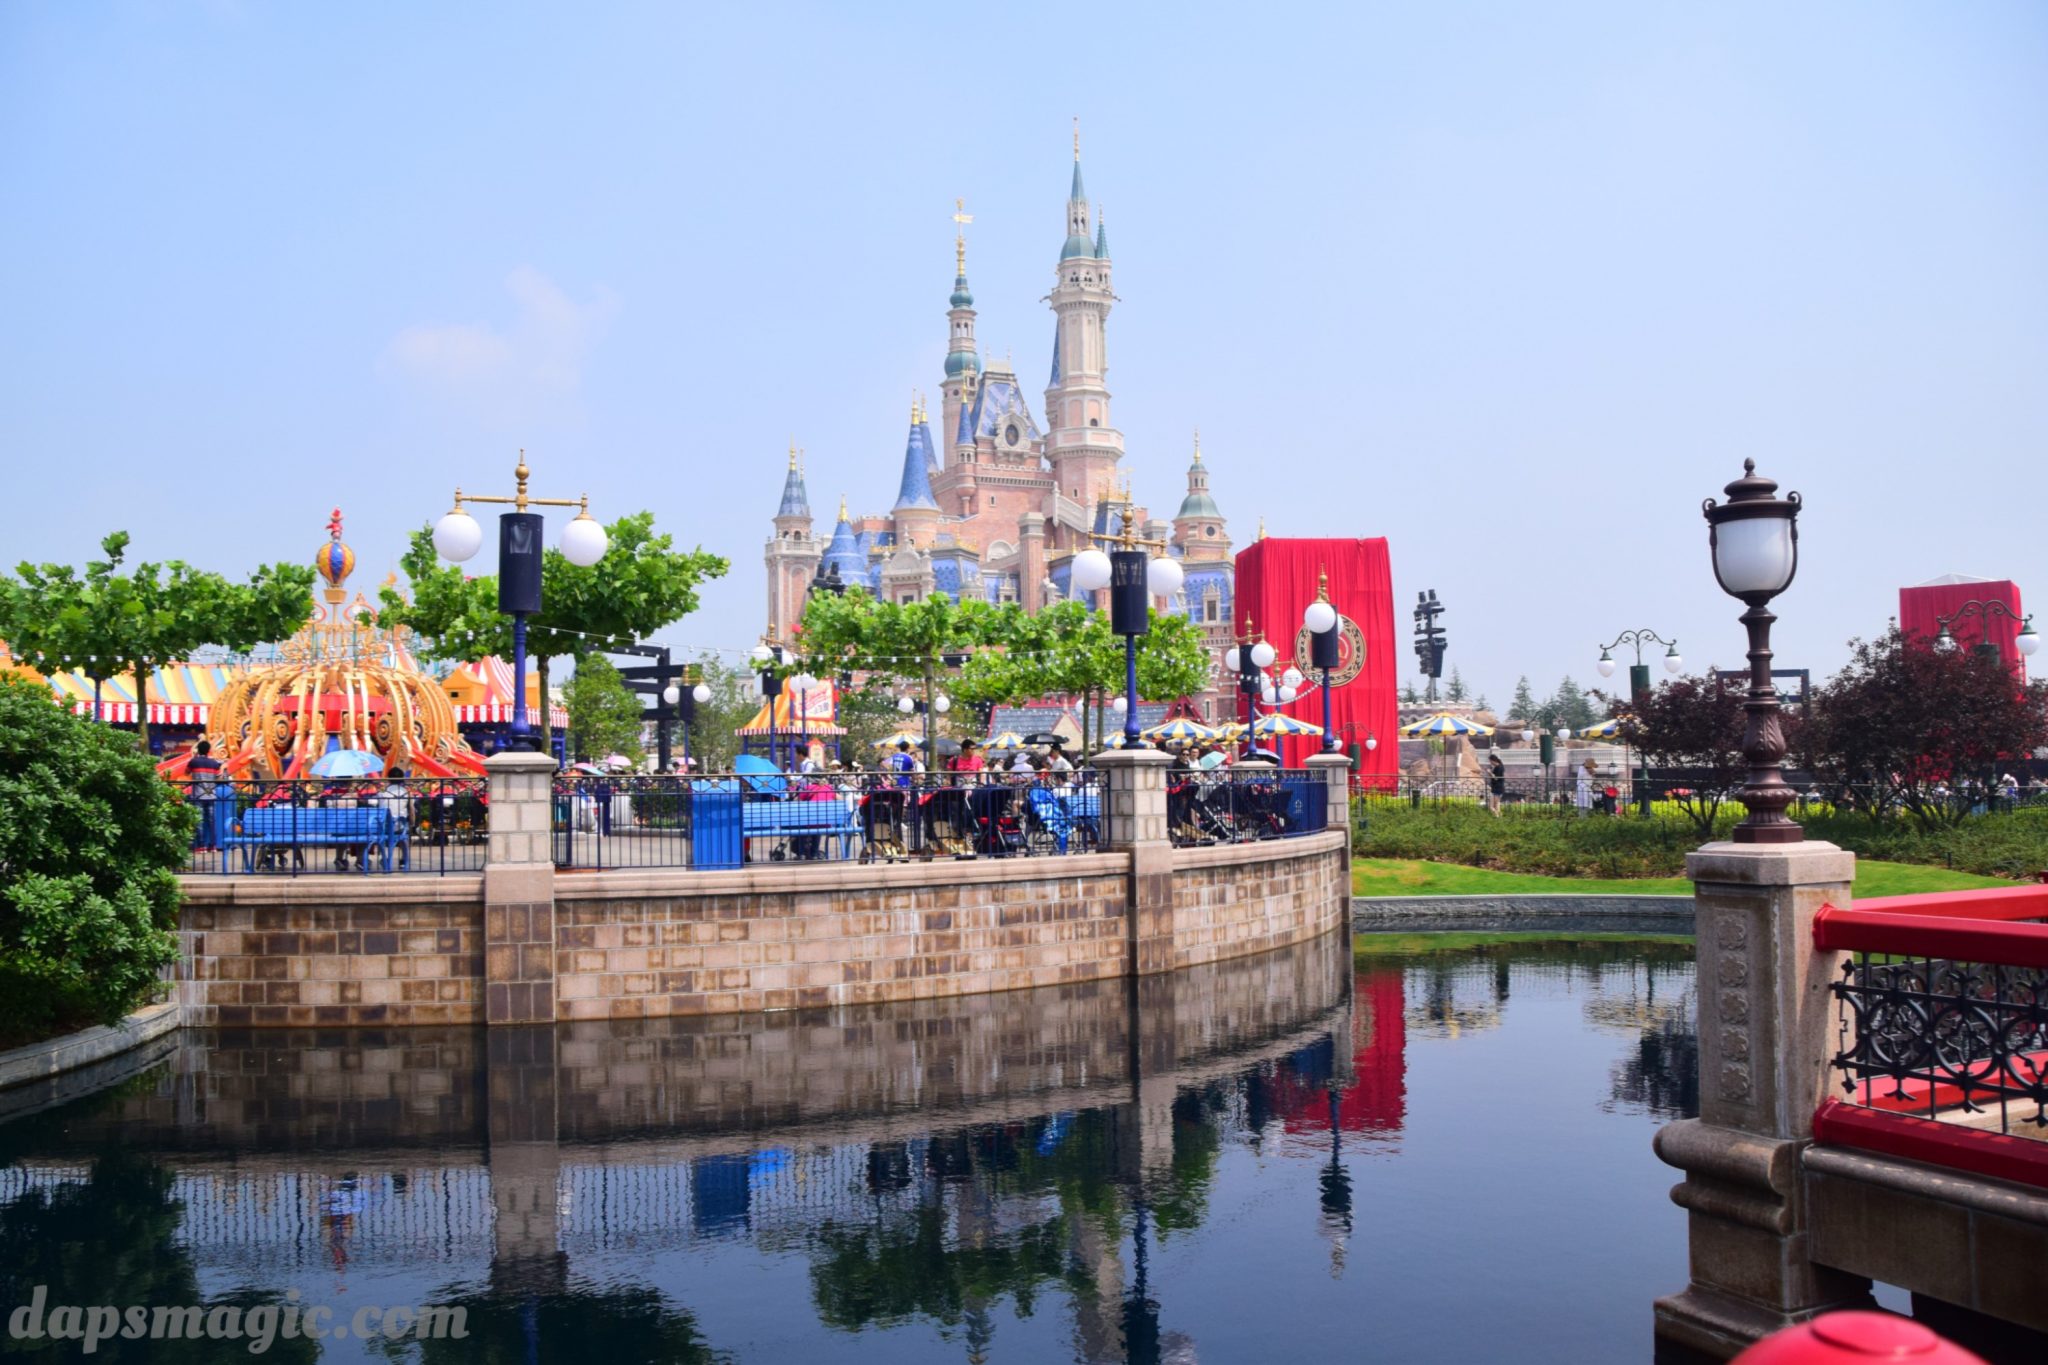 Shanghai Disneyland: One Year Later